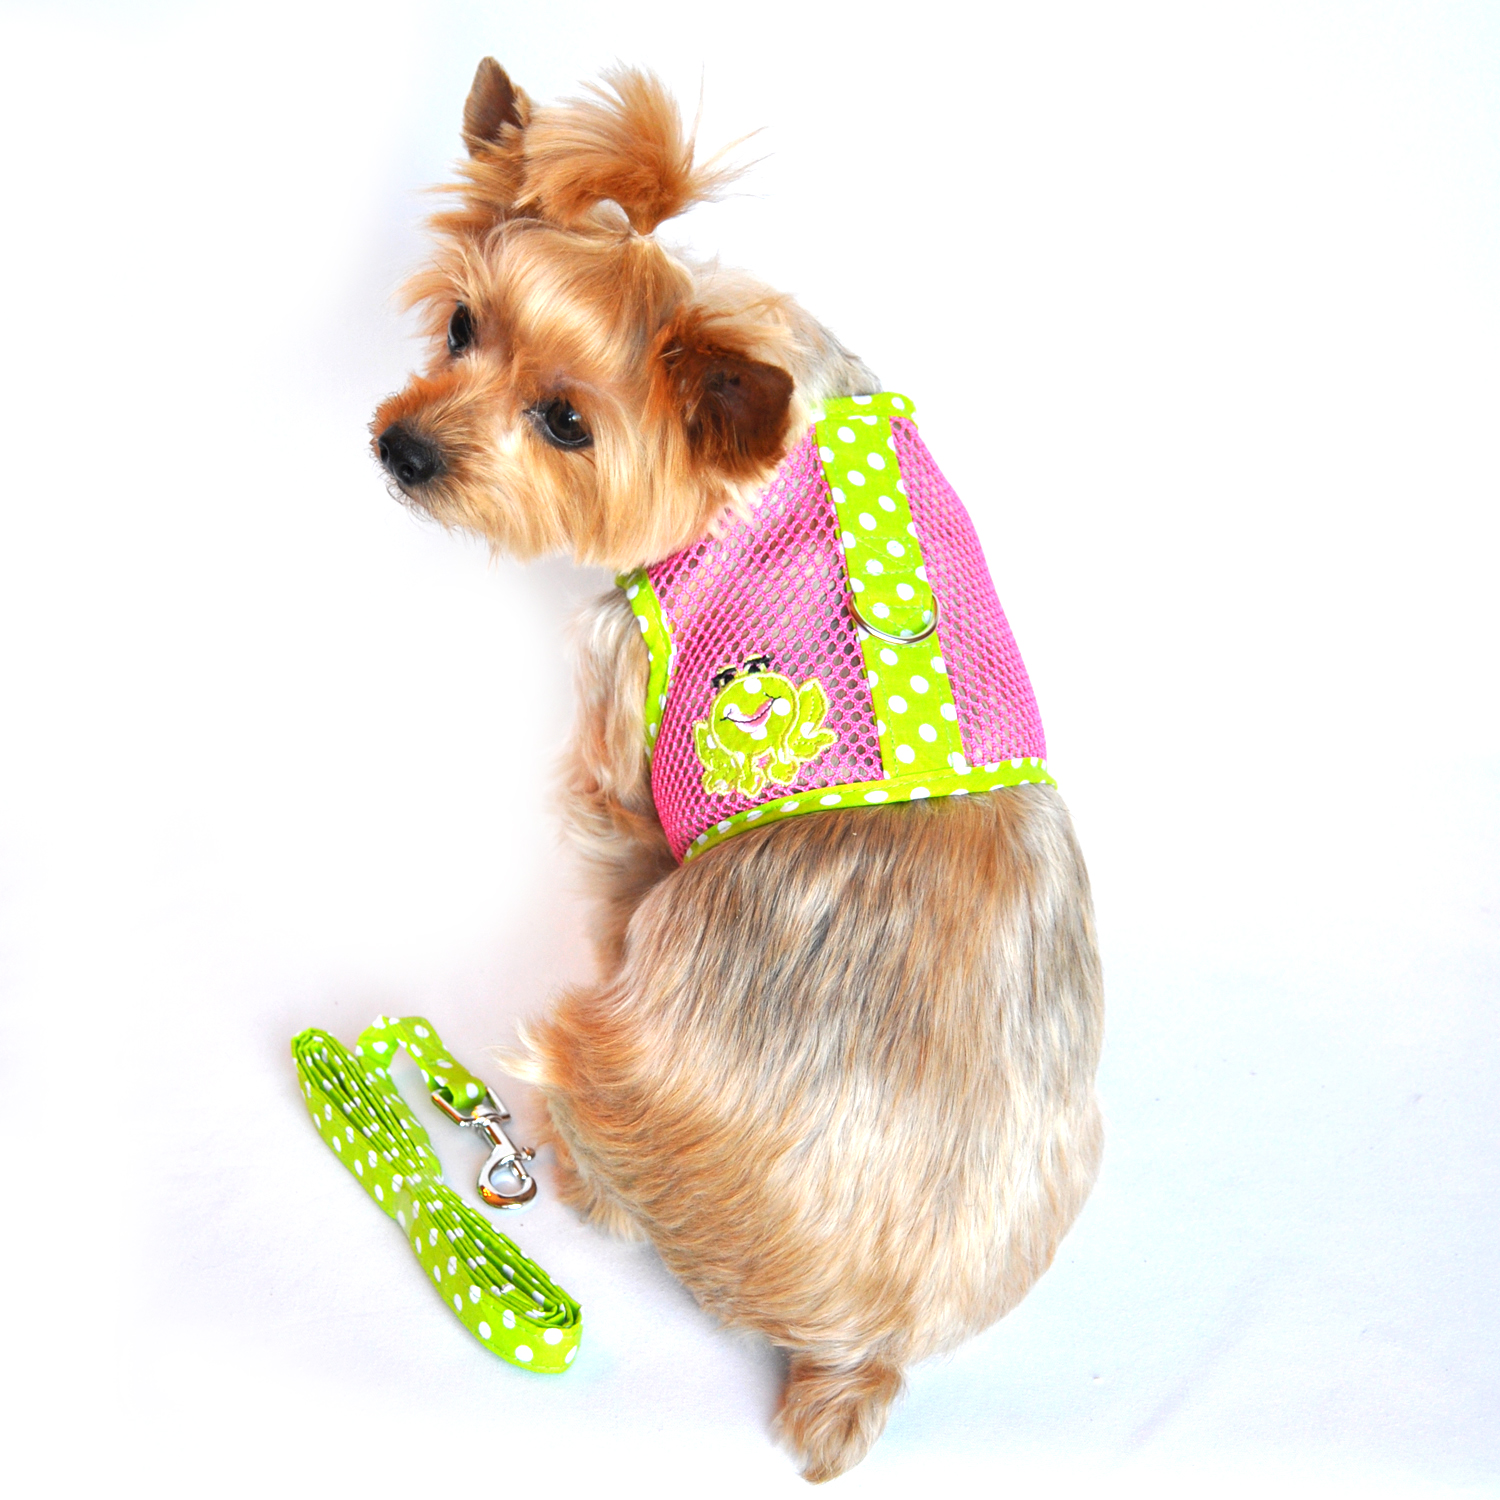 Cool Mesh Dog Harness by Doggie Design - Polka Dot Frog on Pink